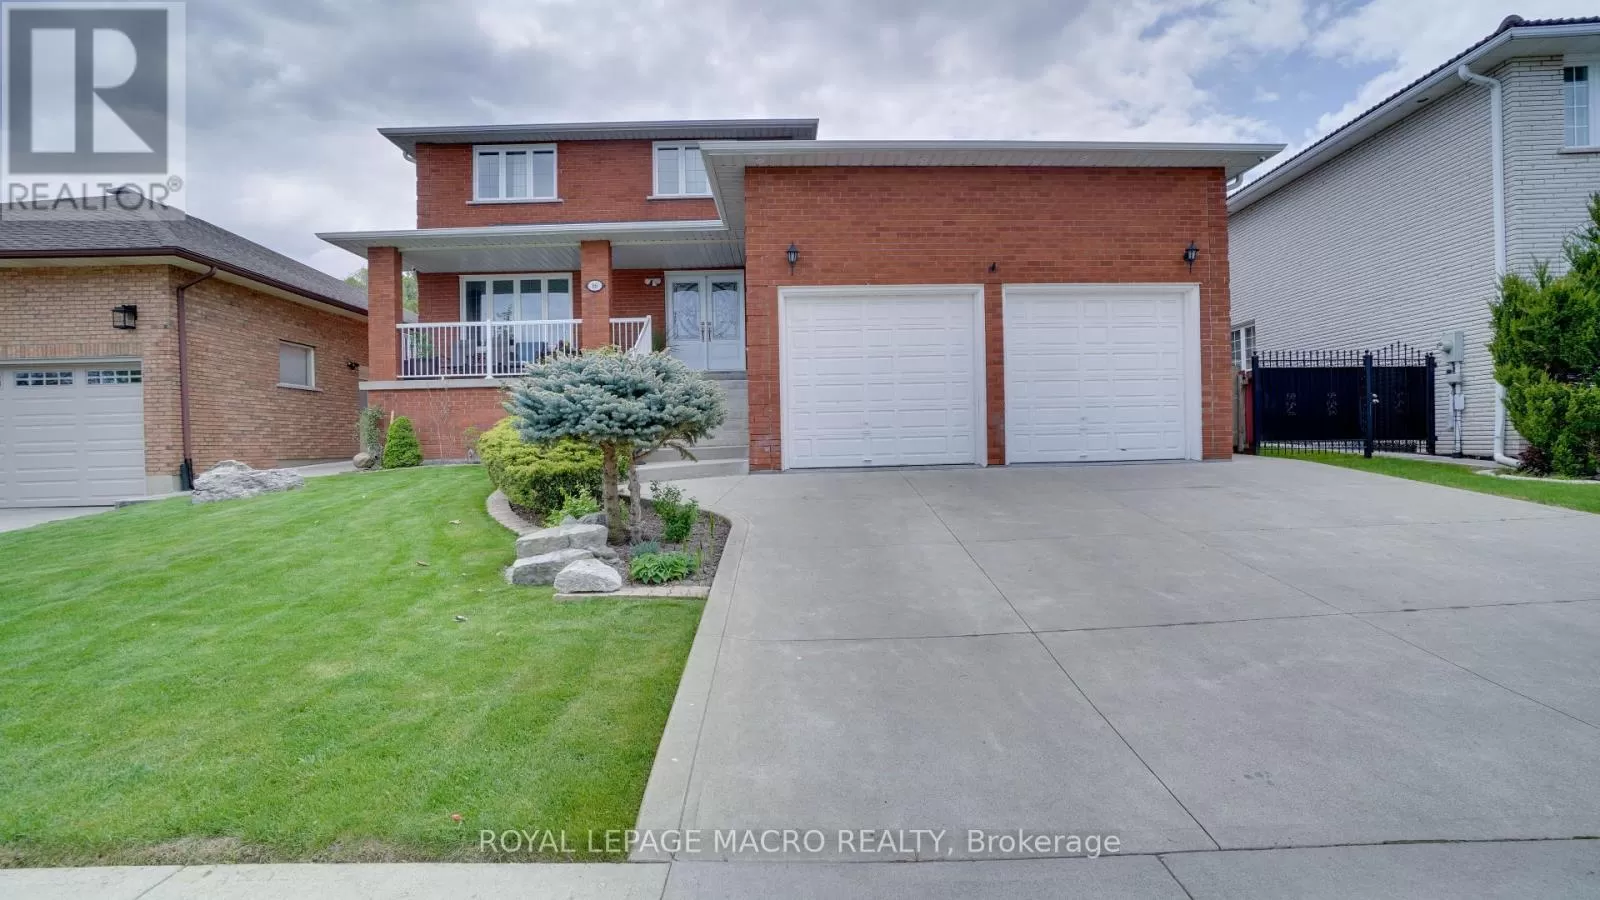 House for rent: 66 Glen Cannon Drive, Hamilton, Ontario L8G 4E1